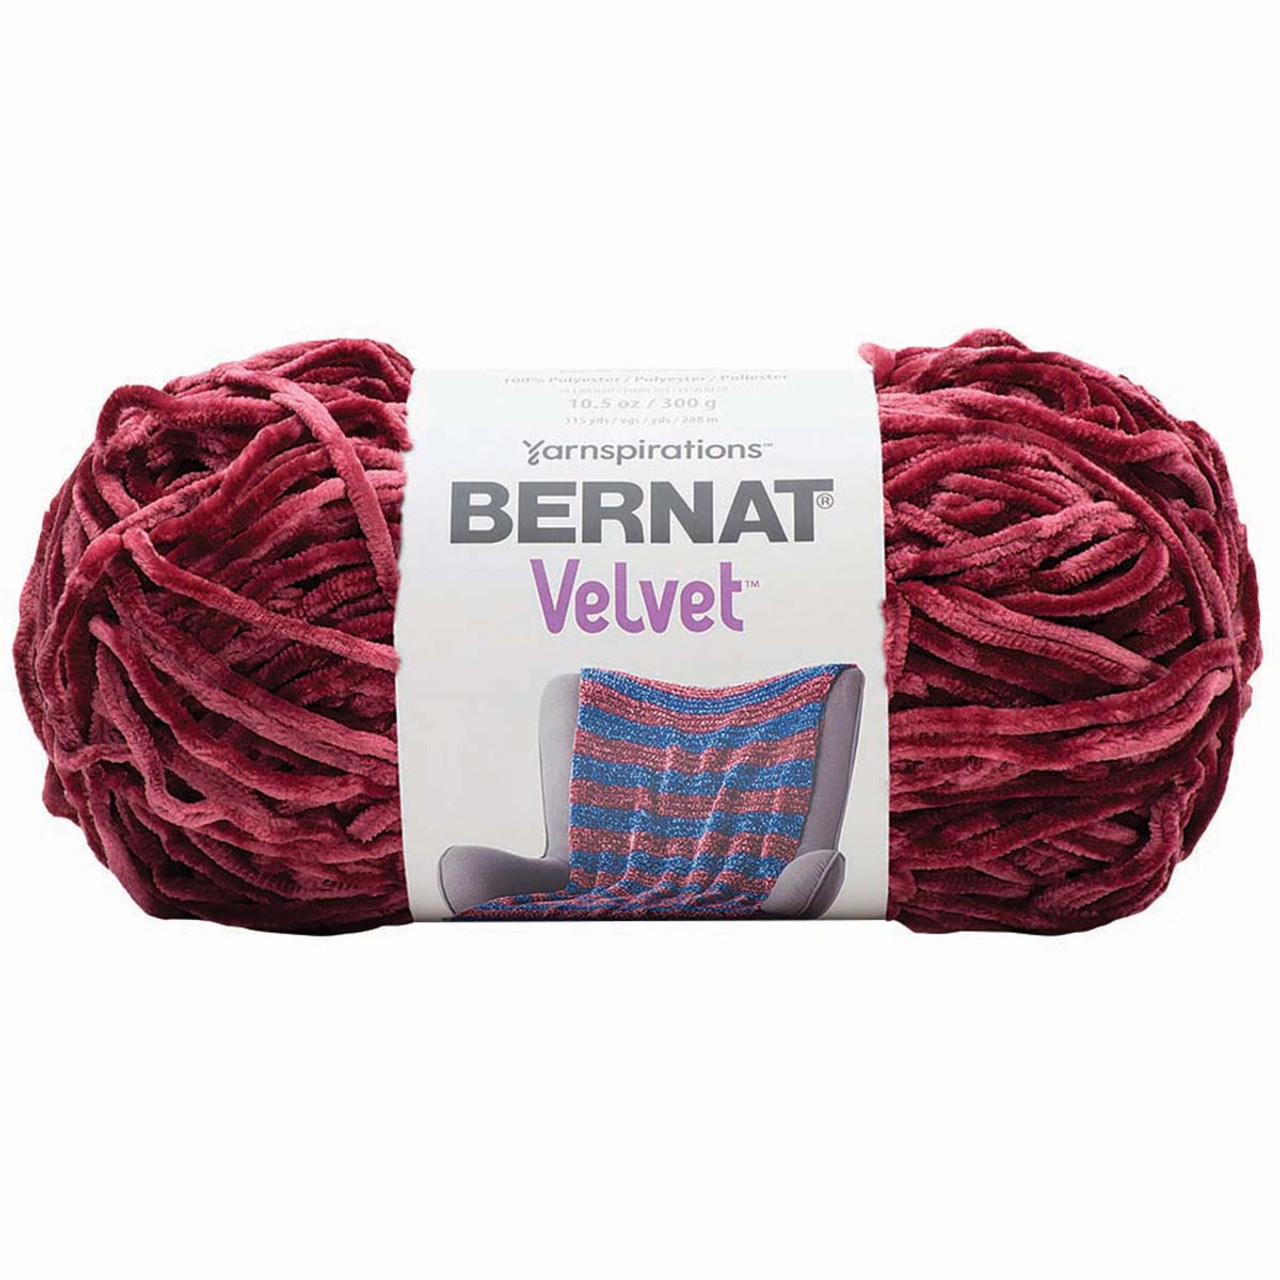 Working with Velvet Yarn